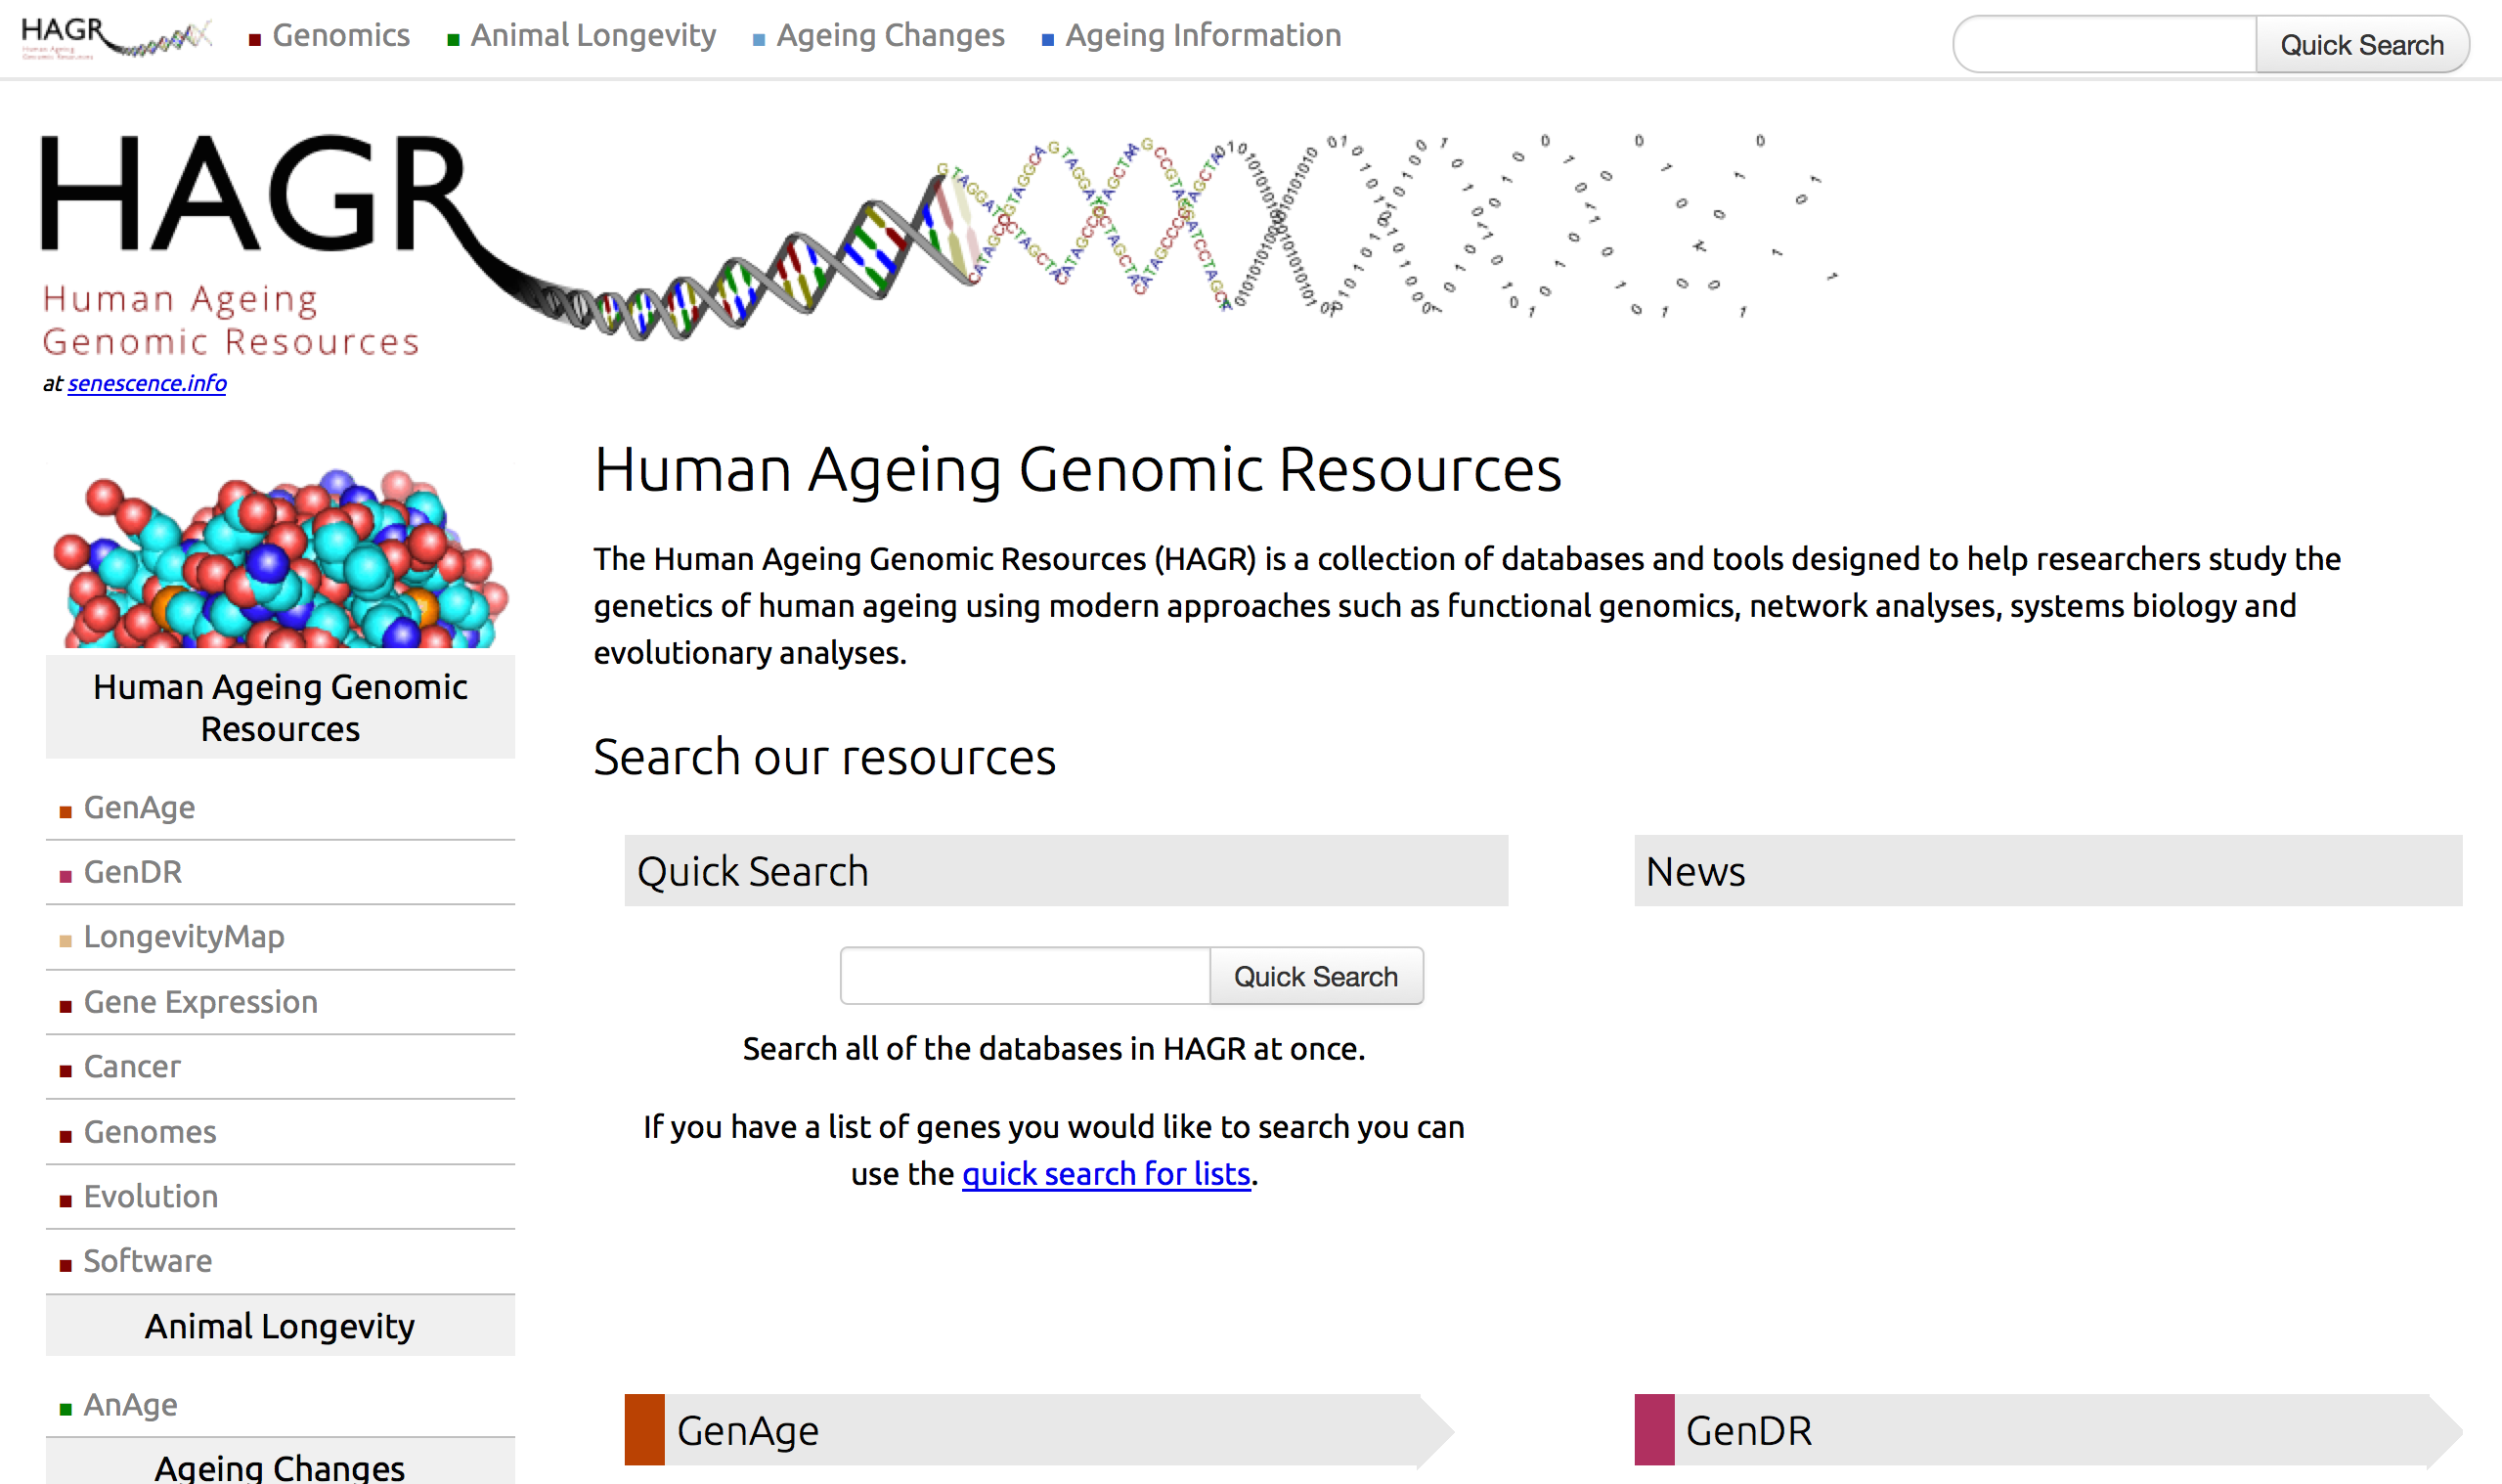 Human Ageing Genomic Resources homepage